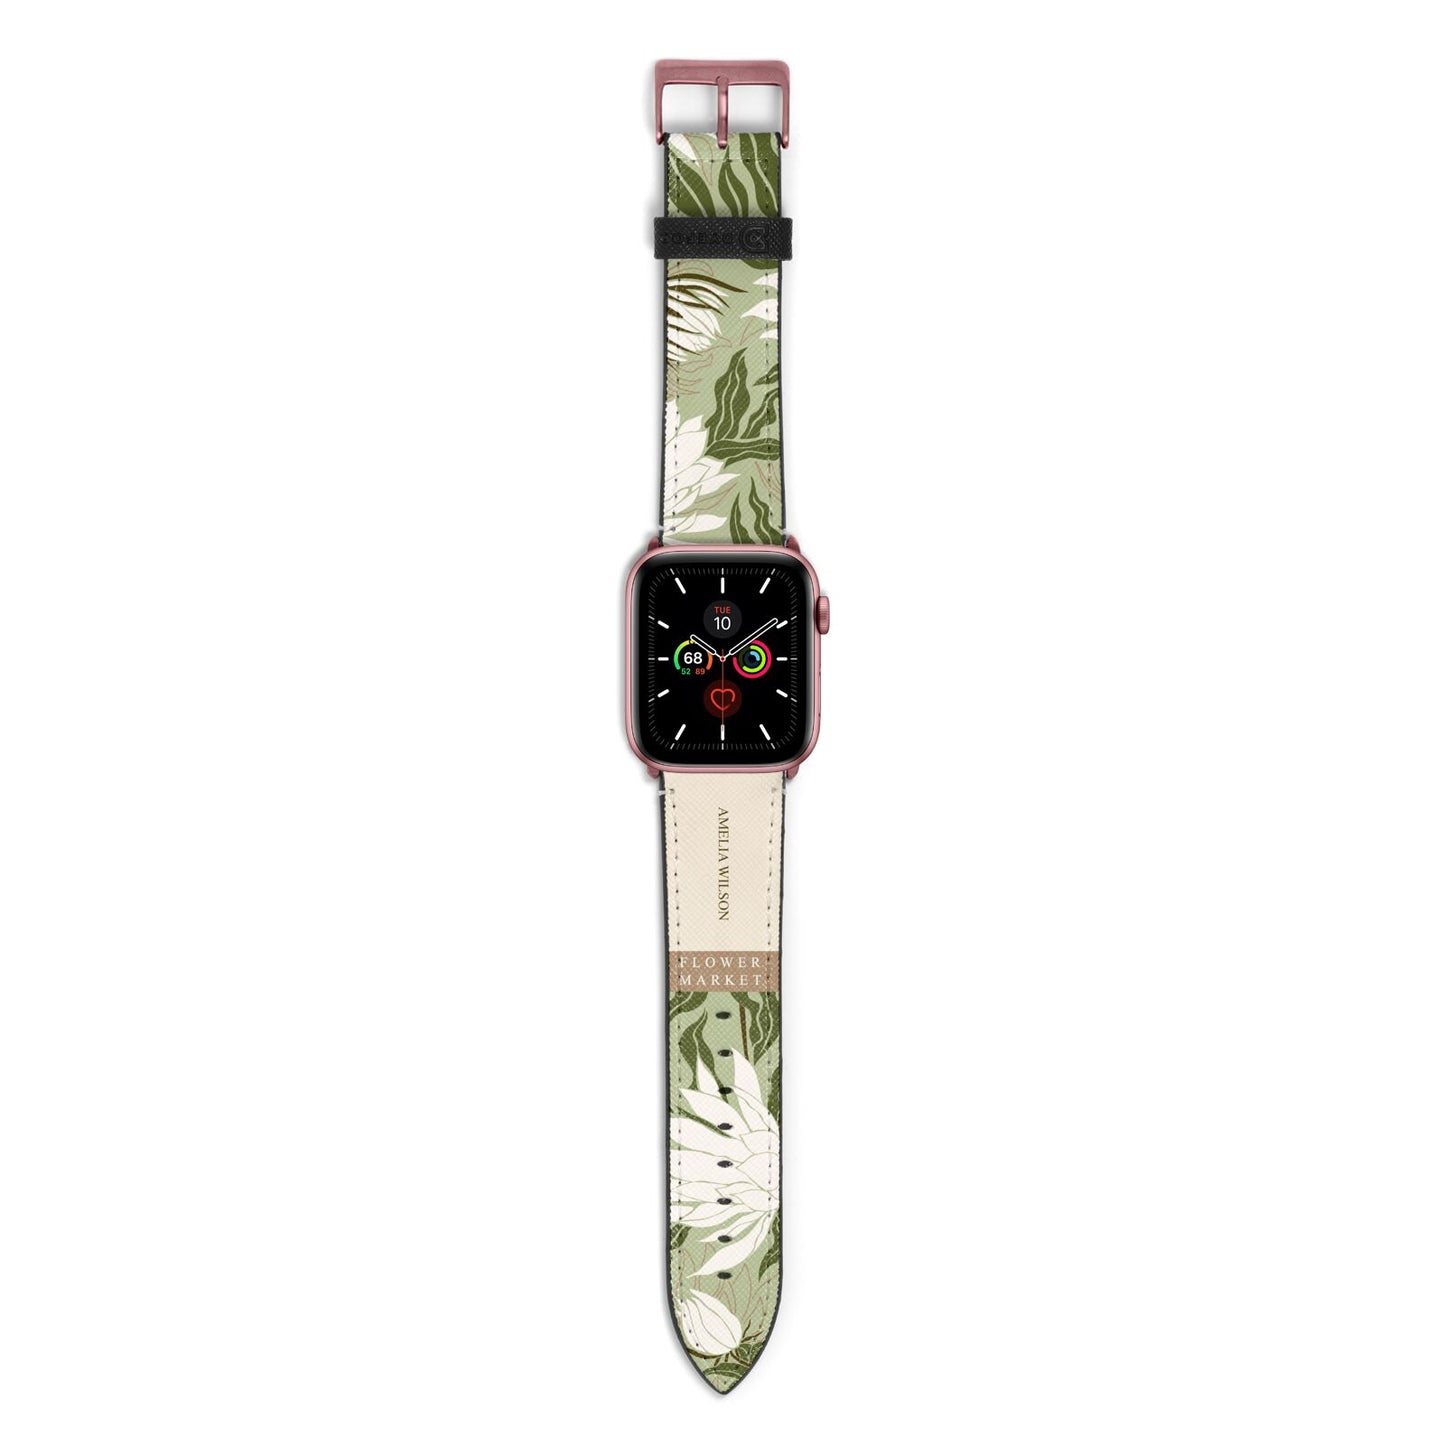 Tokyo Flower Market Apple Watch Strap with Rose Gold Hardware